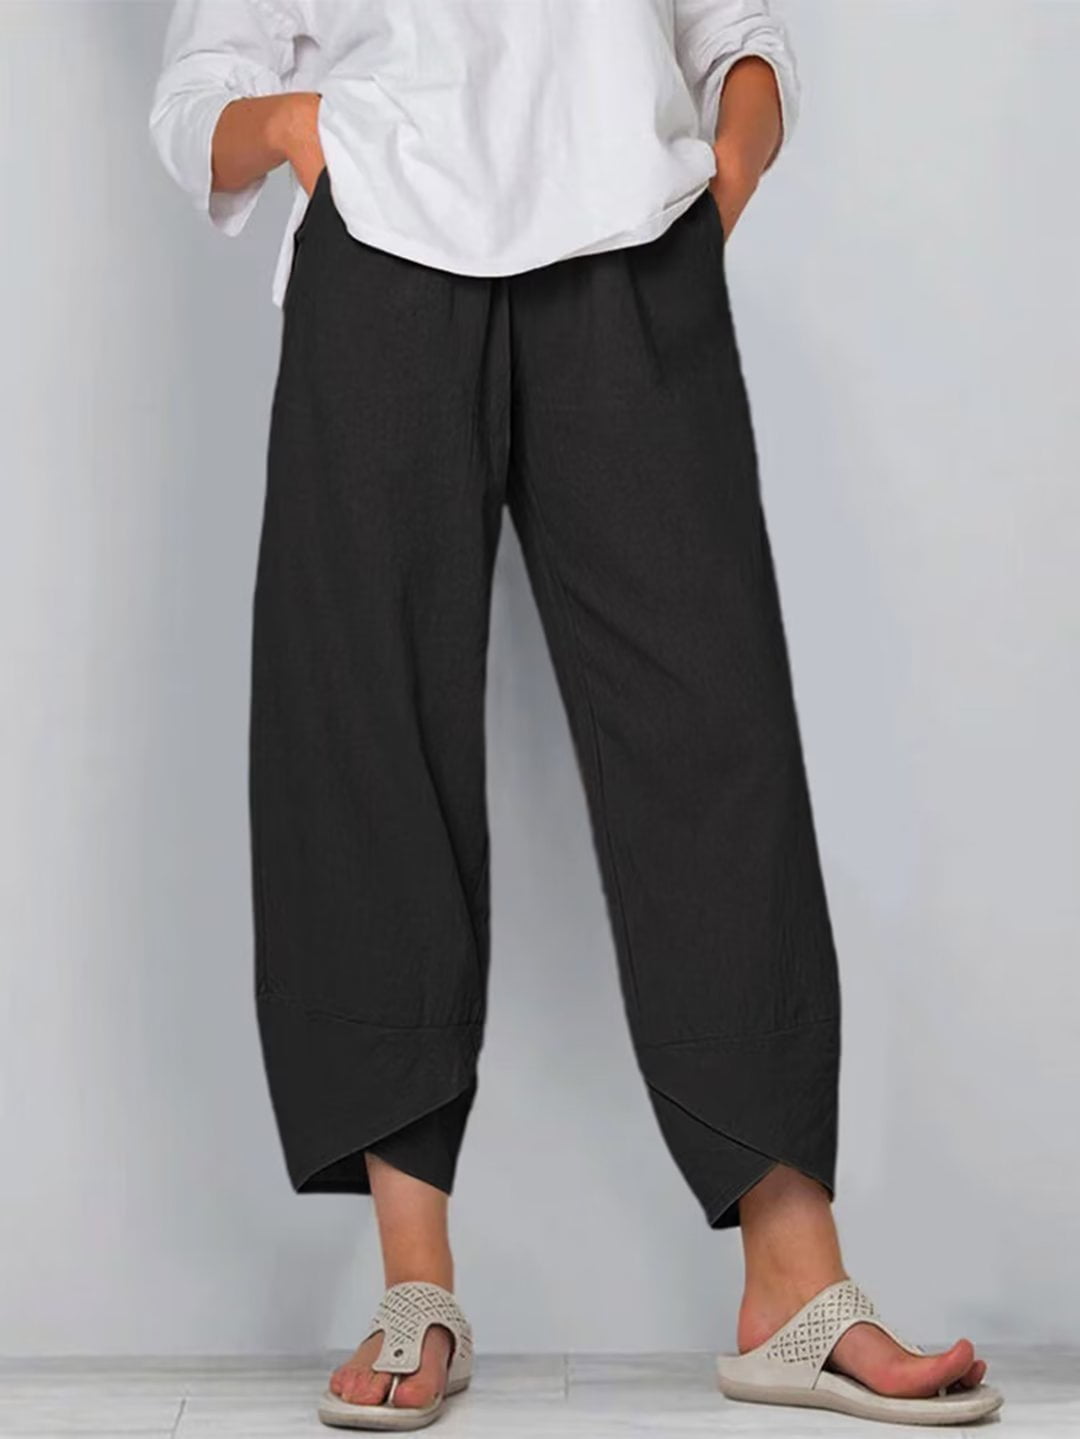 Women's Casual Cotton Linen Harem Pants Elastic Waist Pocketed Pants ...